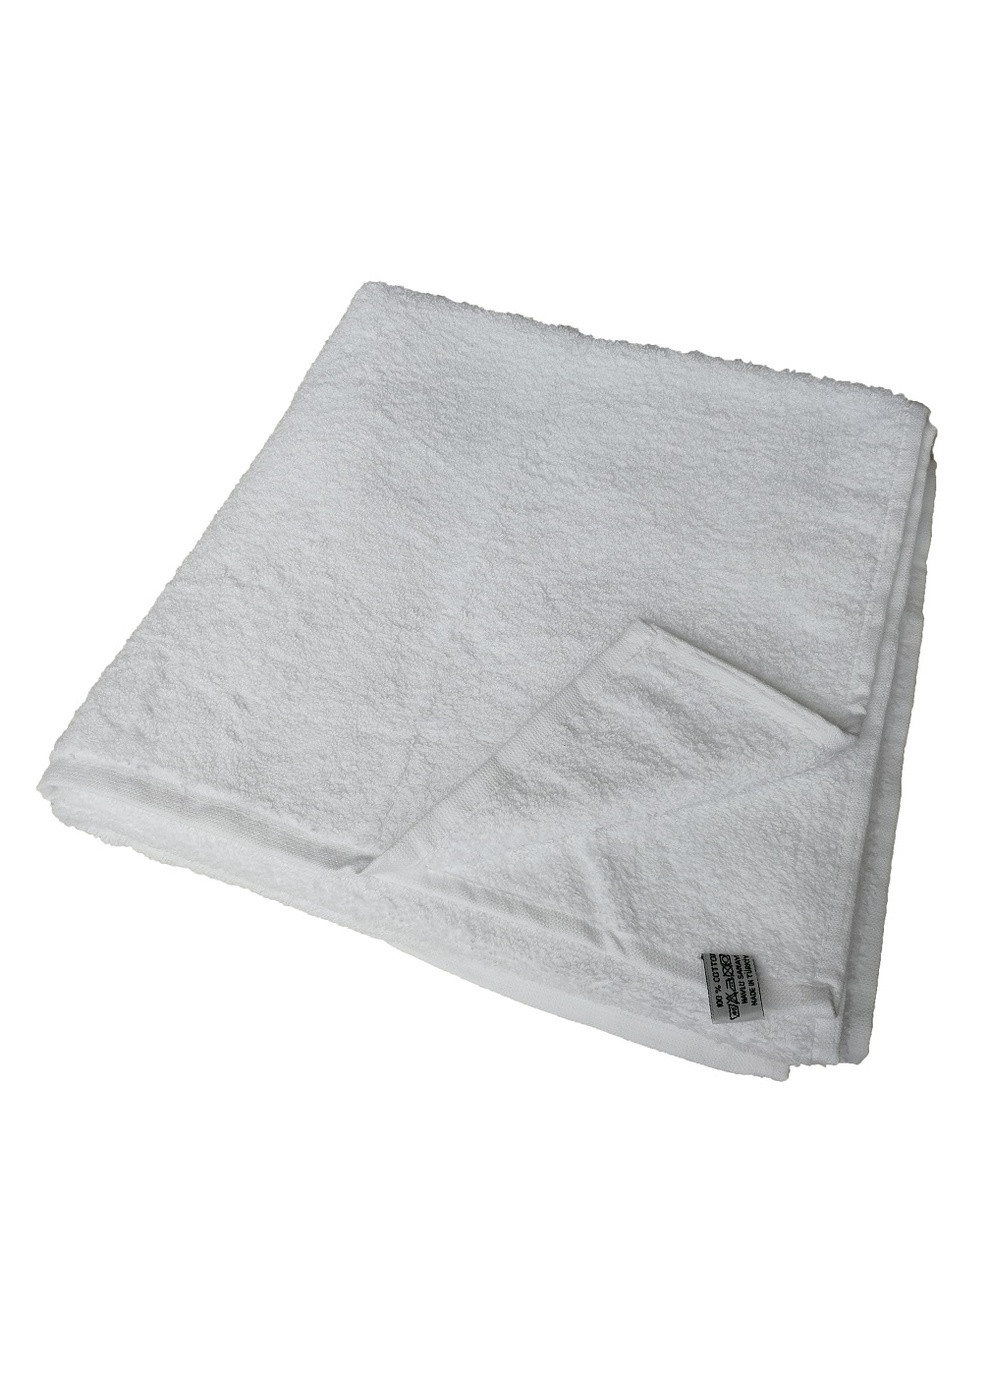 Hanibaba полотенце банное 70х140см однотонный белый производство - Турция